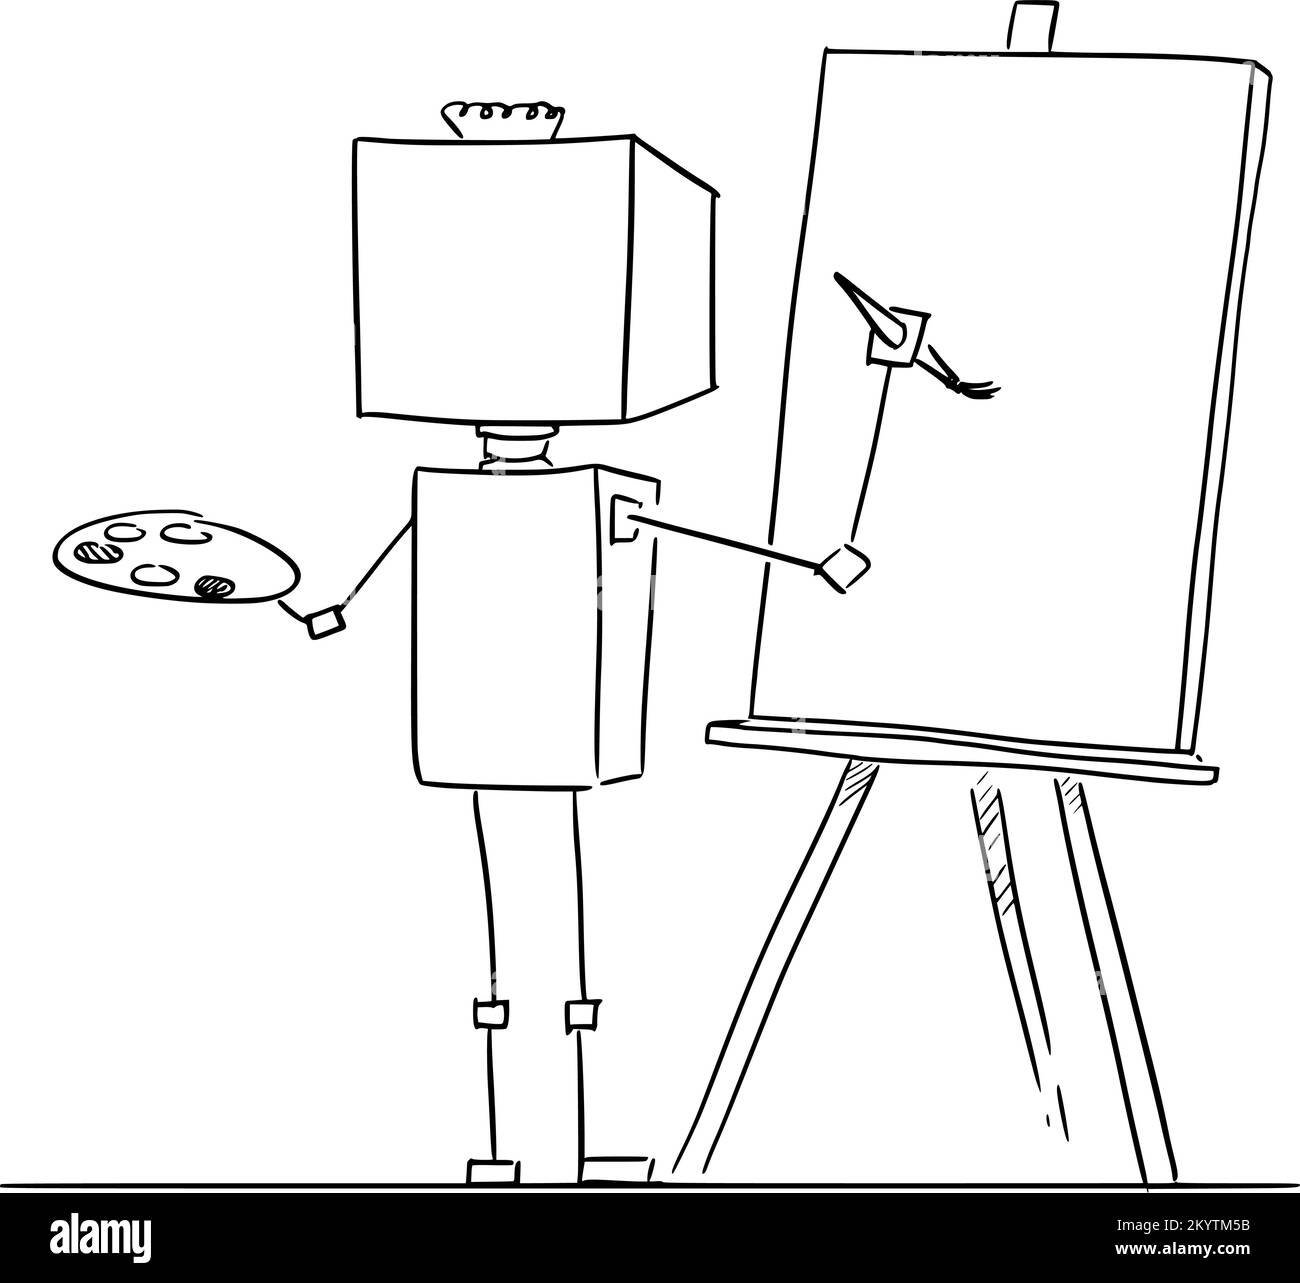 Artificial Intelligence Robot Artist Generating or Painting on Canvas, Vector Cartoon Stick Figure Illustration Stock Vector